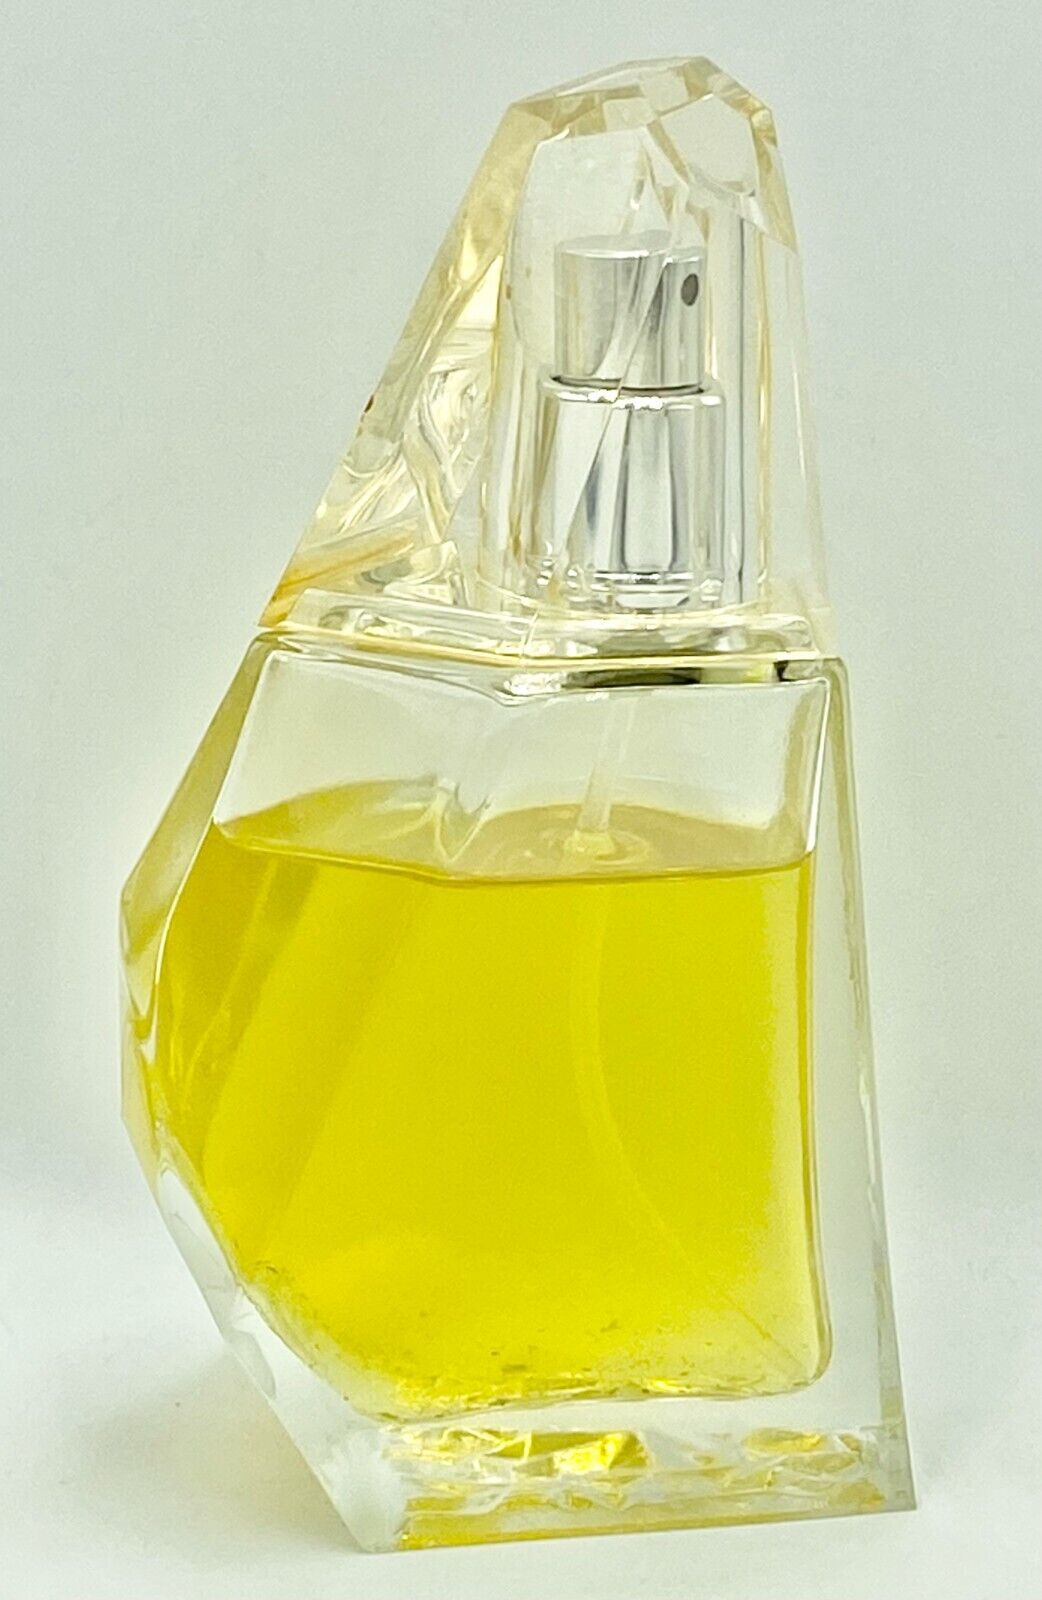 1999 Avon Perceive Eau De Parfum Spray 1.7 fl. oz. Approx. 80% Full No Box